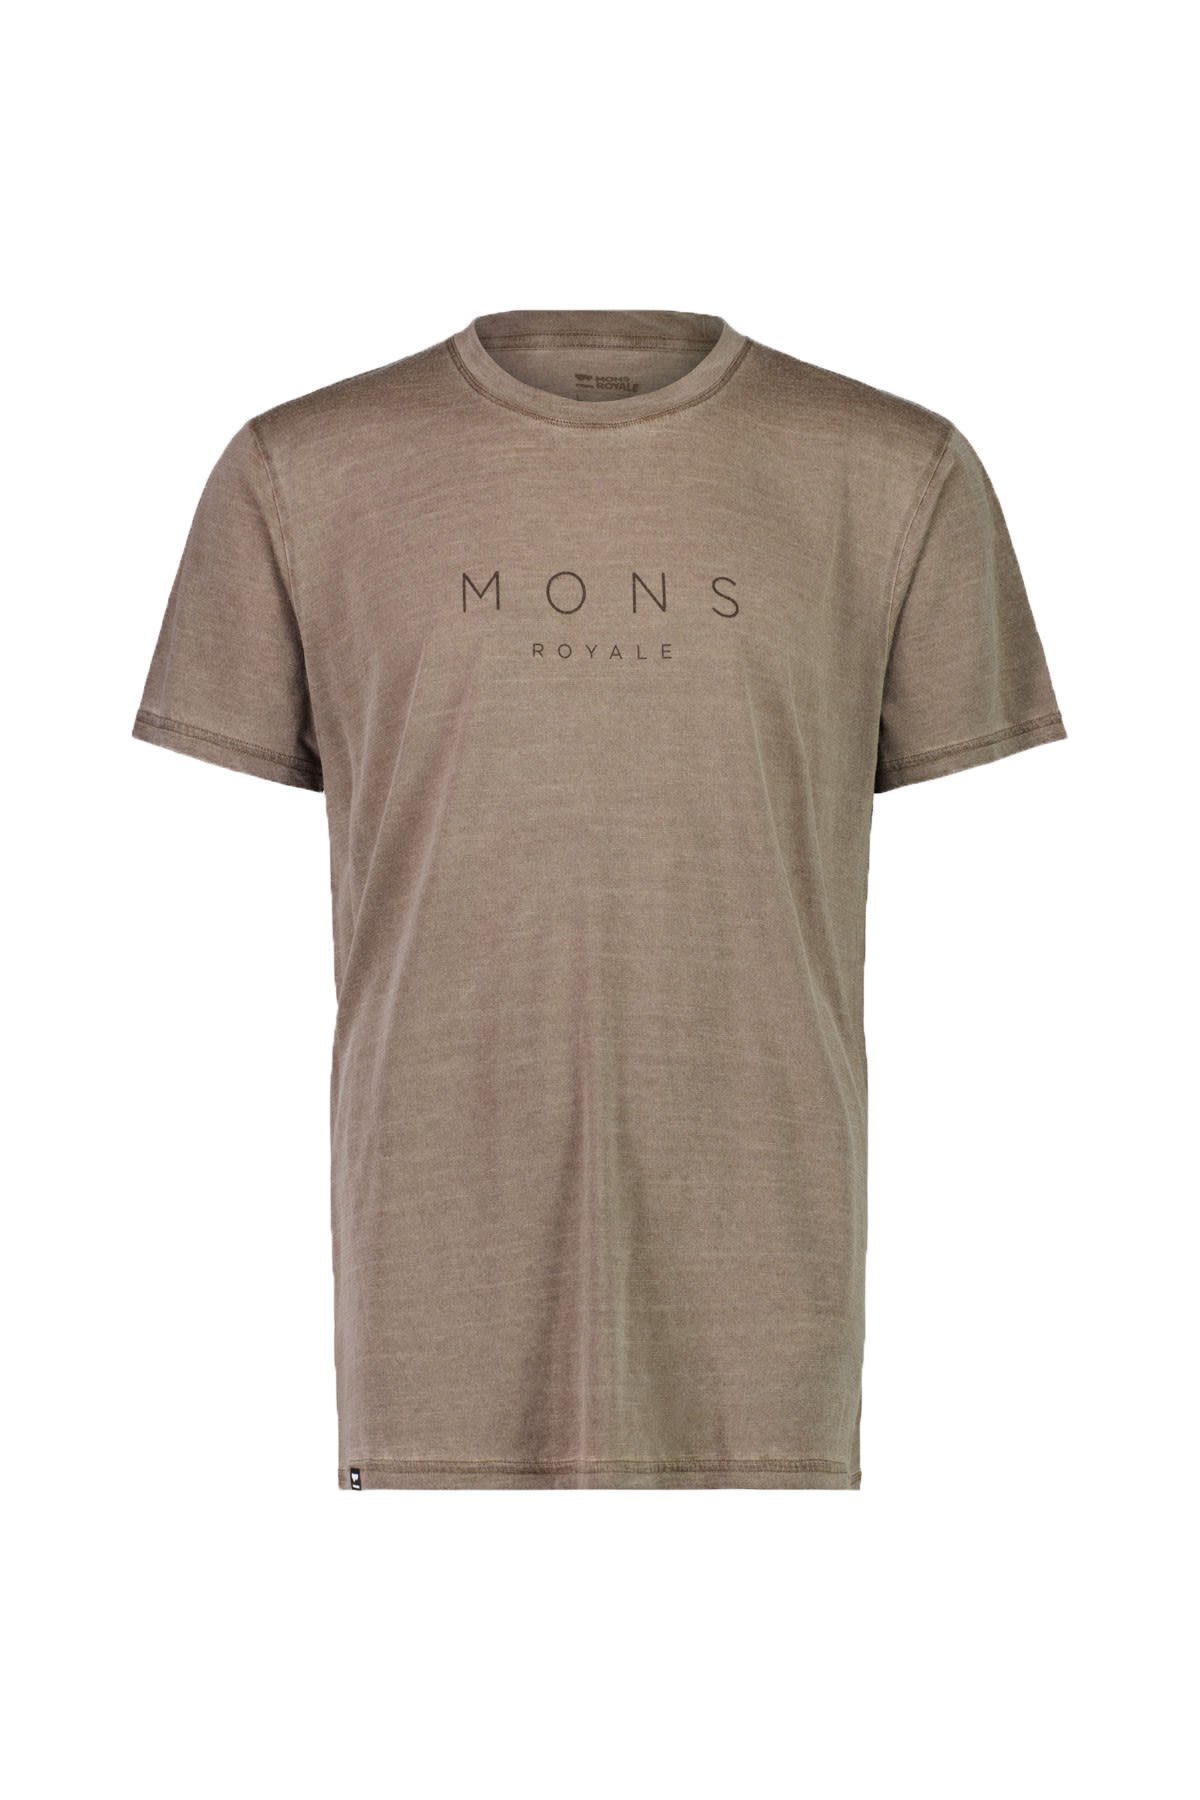 Mons Royale T-Shirt Mons Royale M Zephyr T-shirt Herren Kurzarm-Shirt Walnut